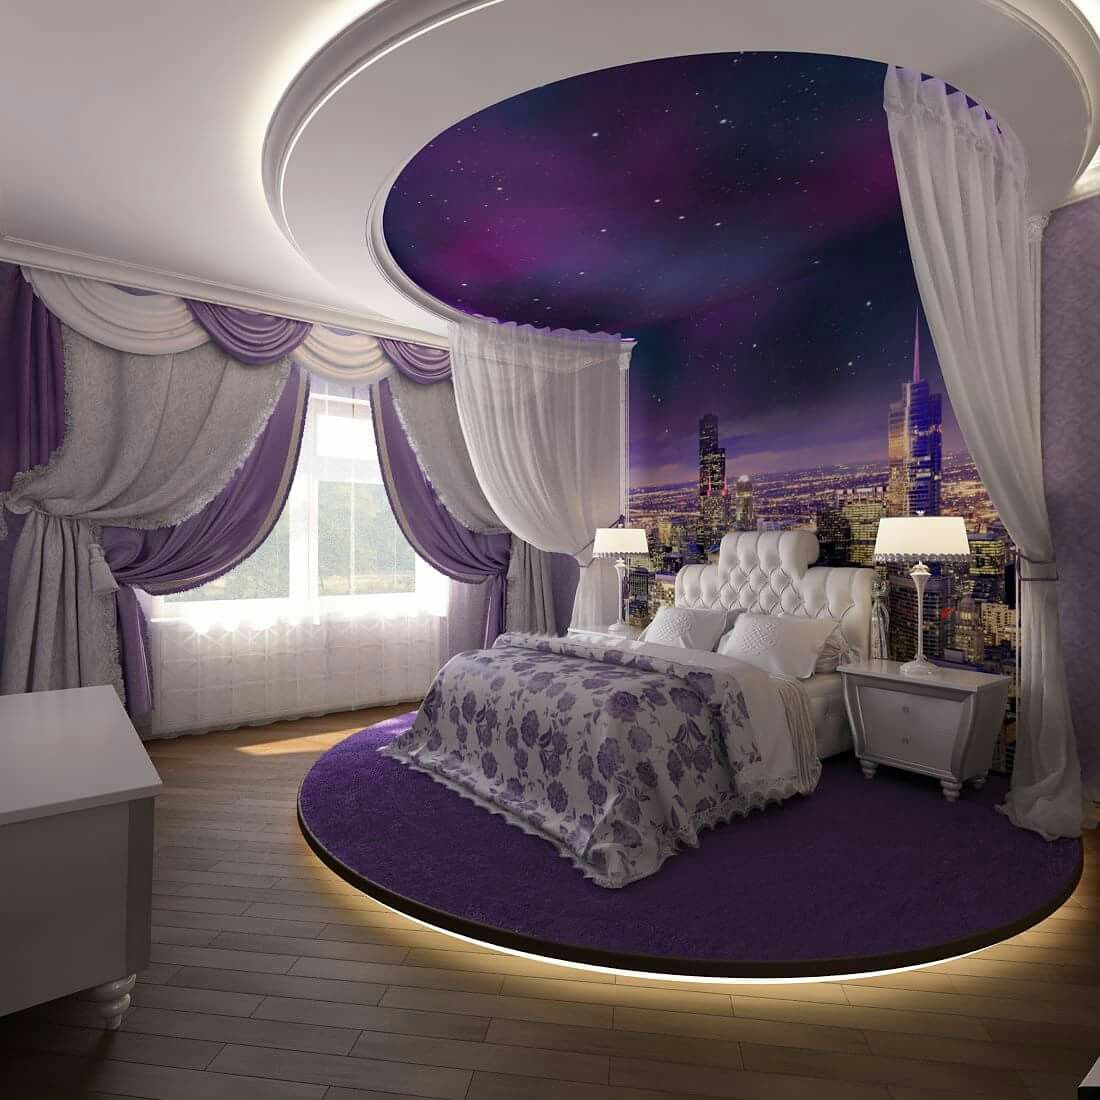 Purple Flowers In The Bedroom